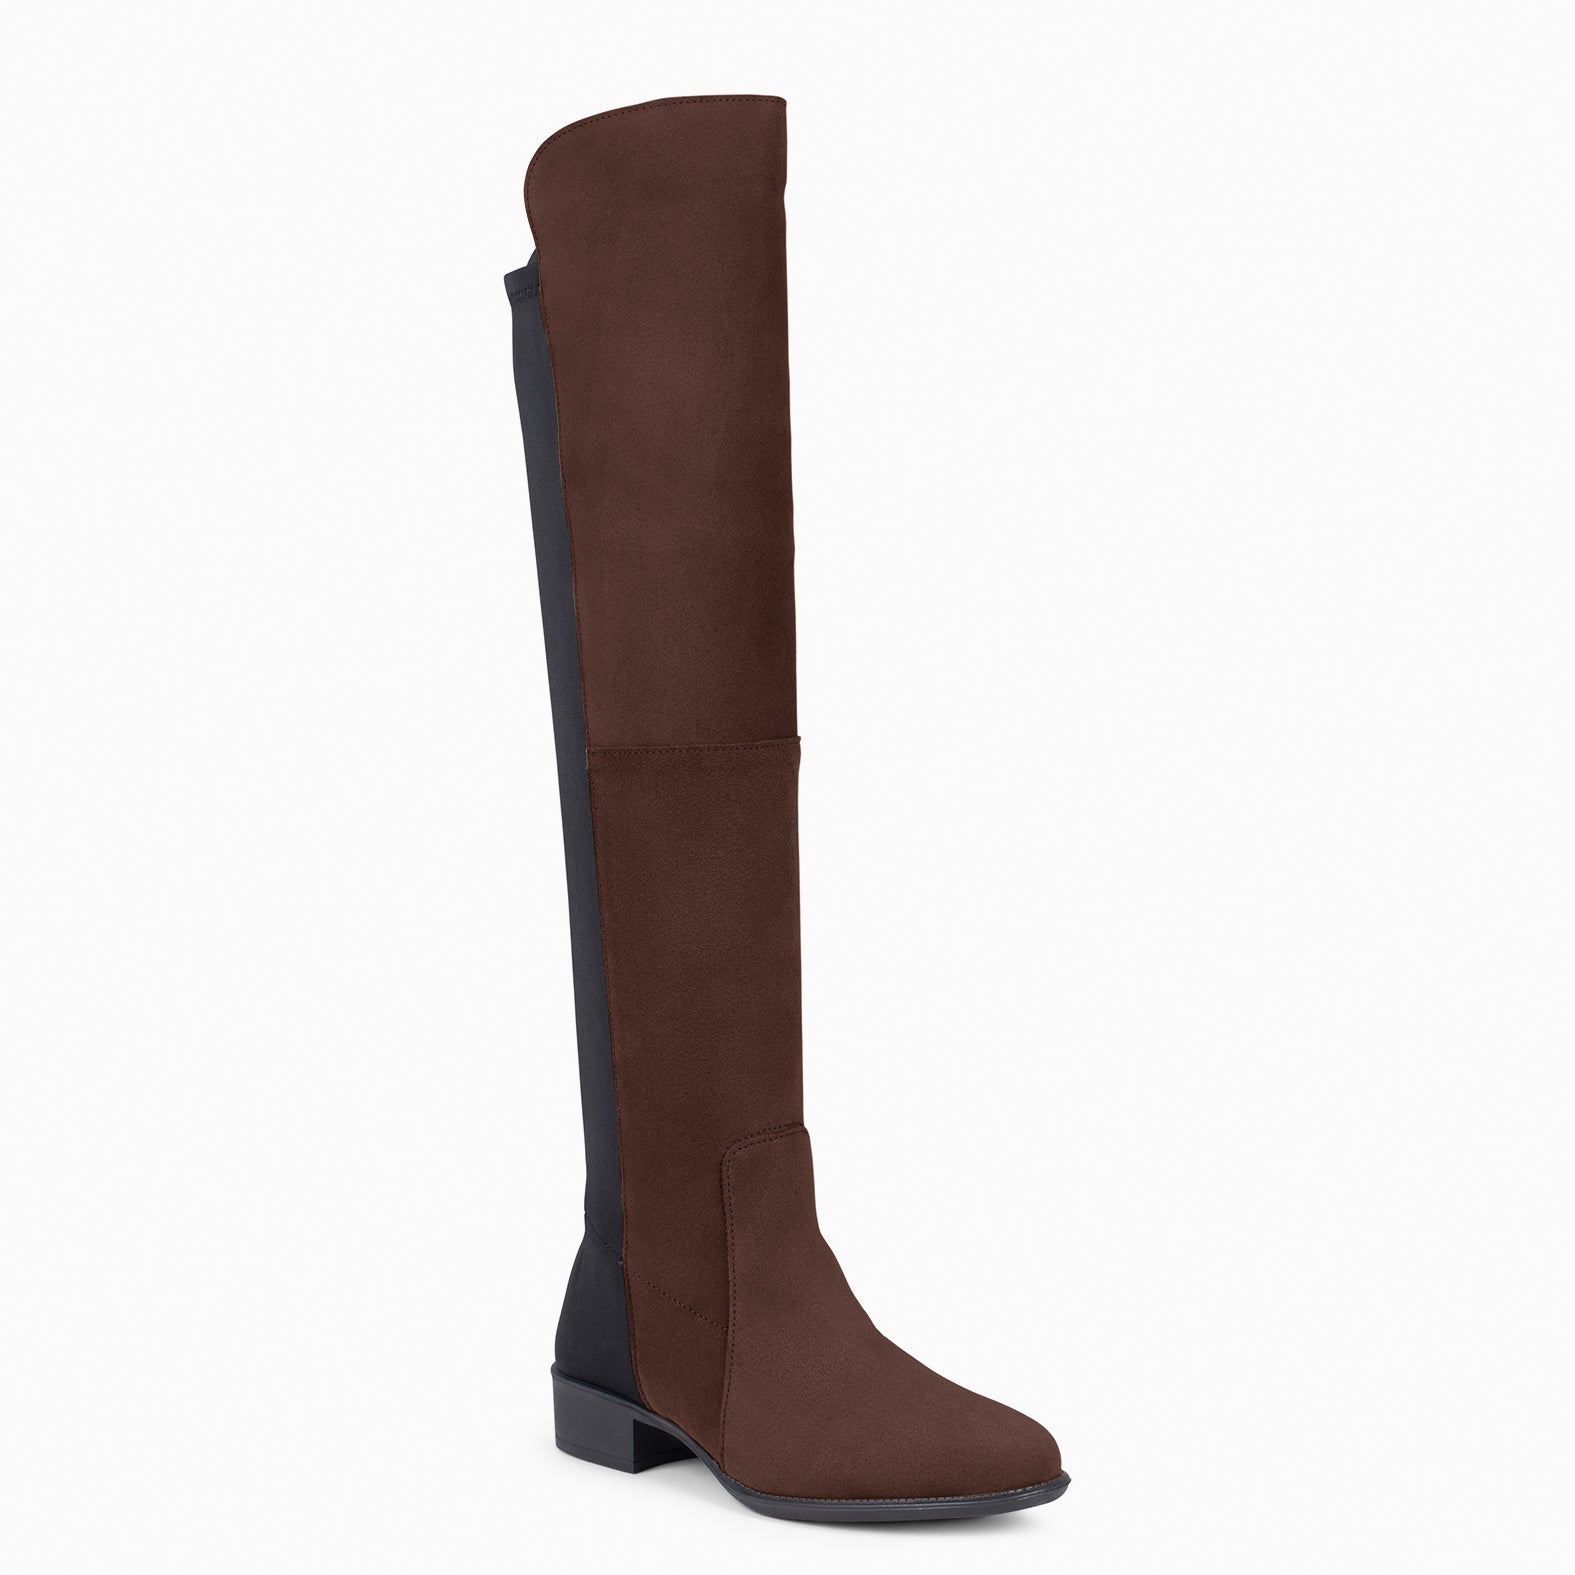 ELASTIC – BROWN knee-high and low heel boot